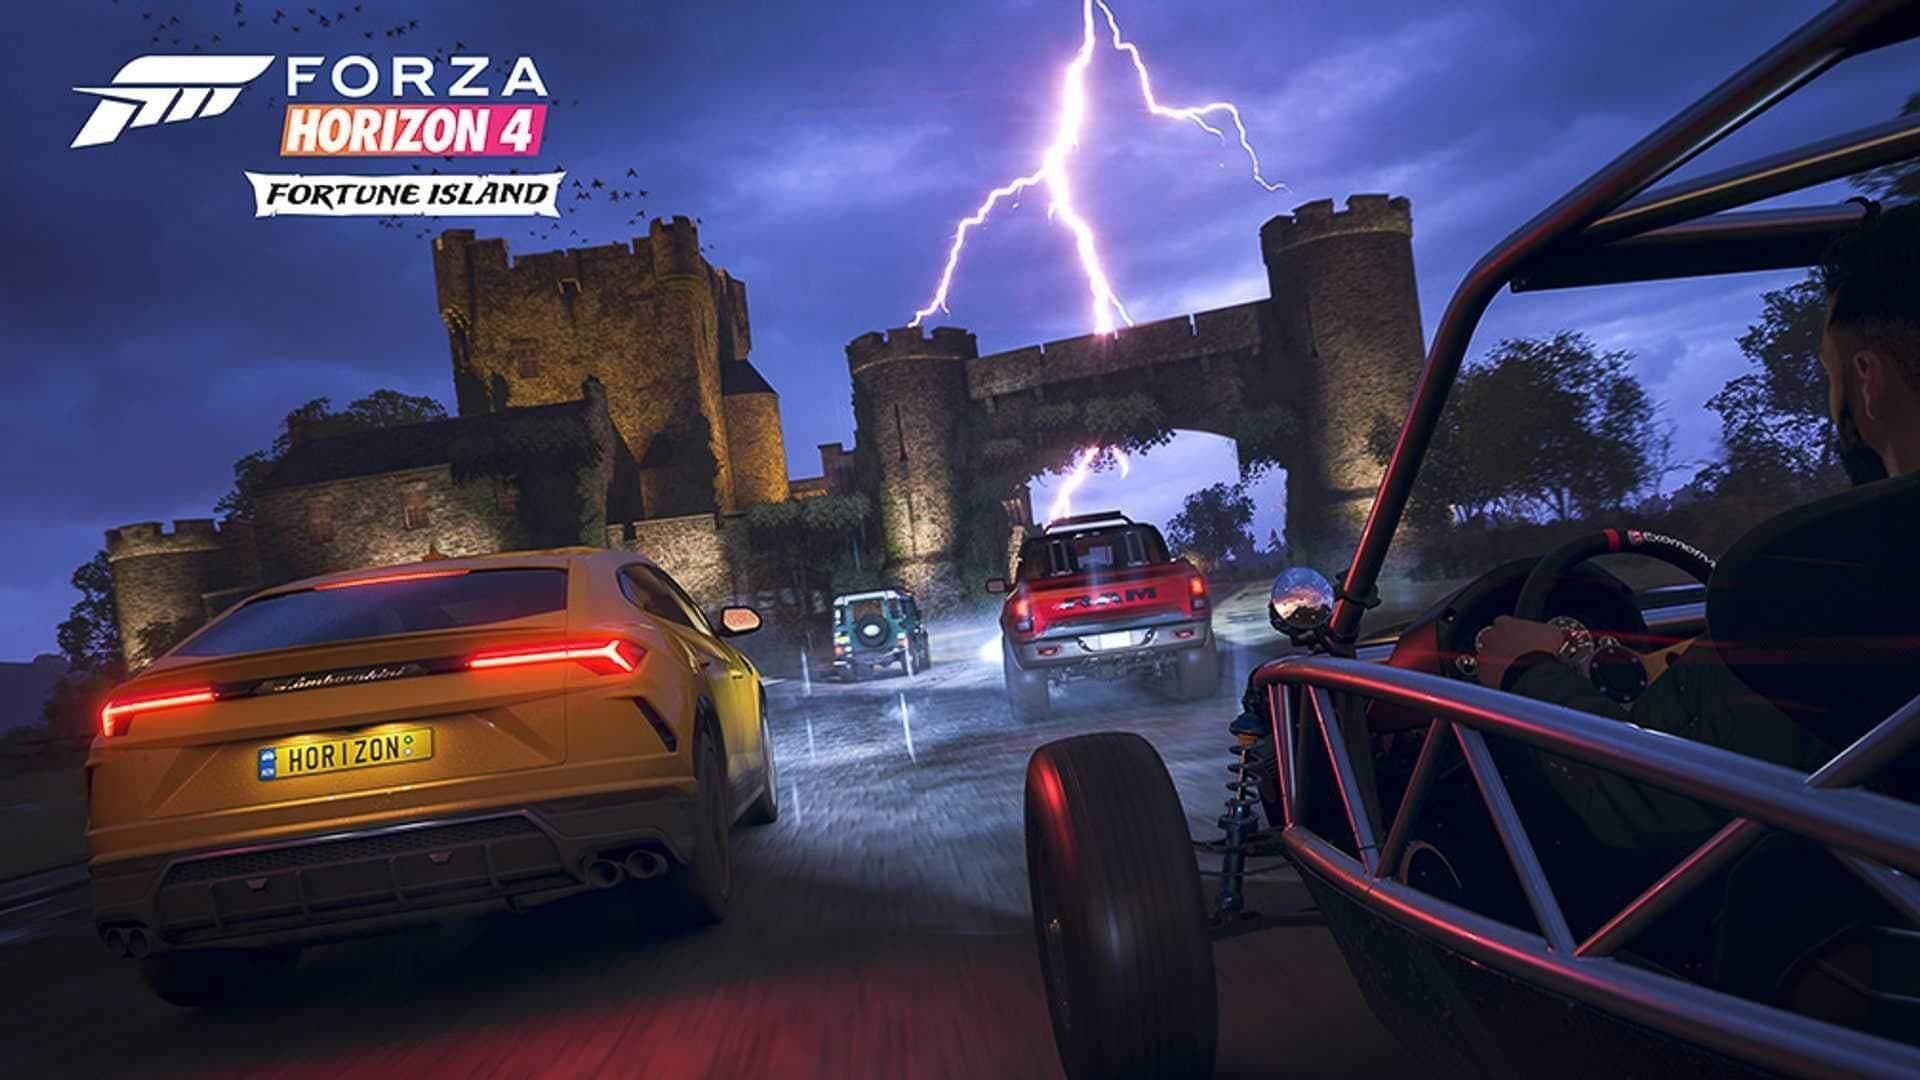 Forza Horizon 4: Fortune Island - למחשב ולאקסבוקס - EXON גיימס - משחקים ותוכנות למחשב ולאקס בוקס!